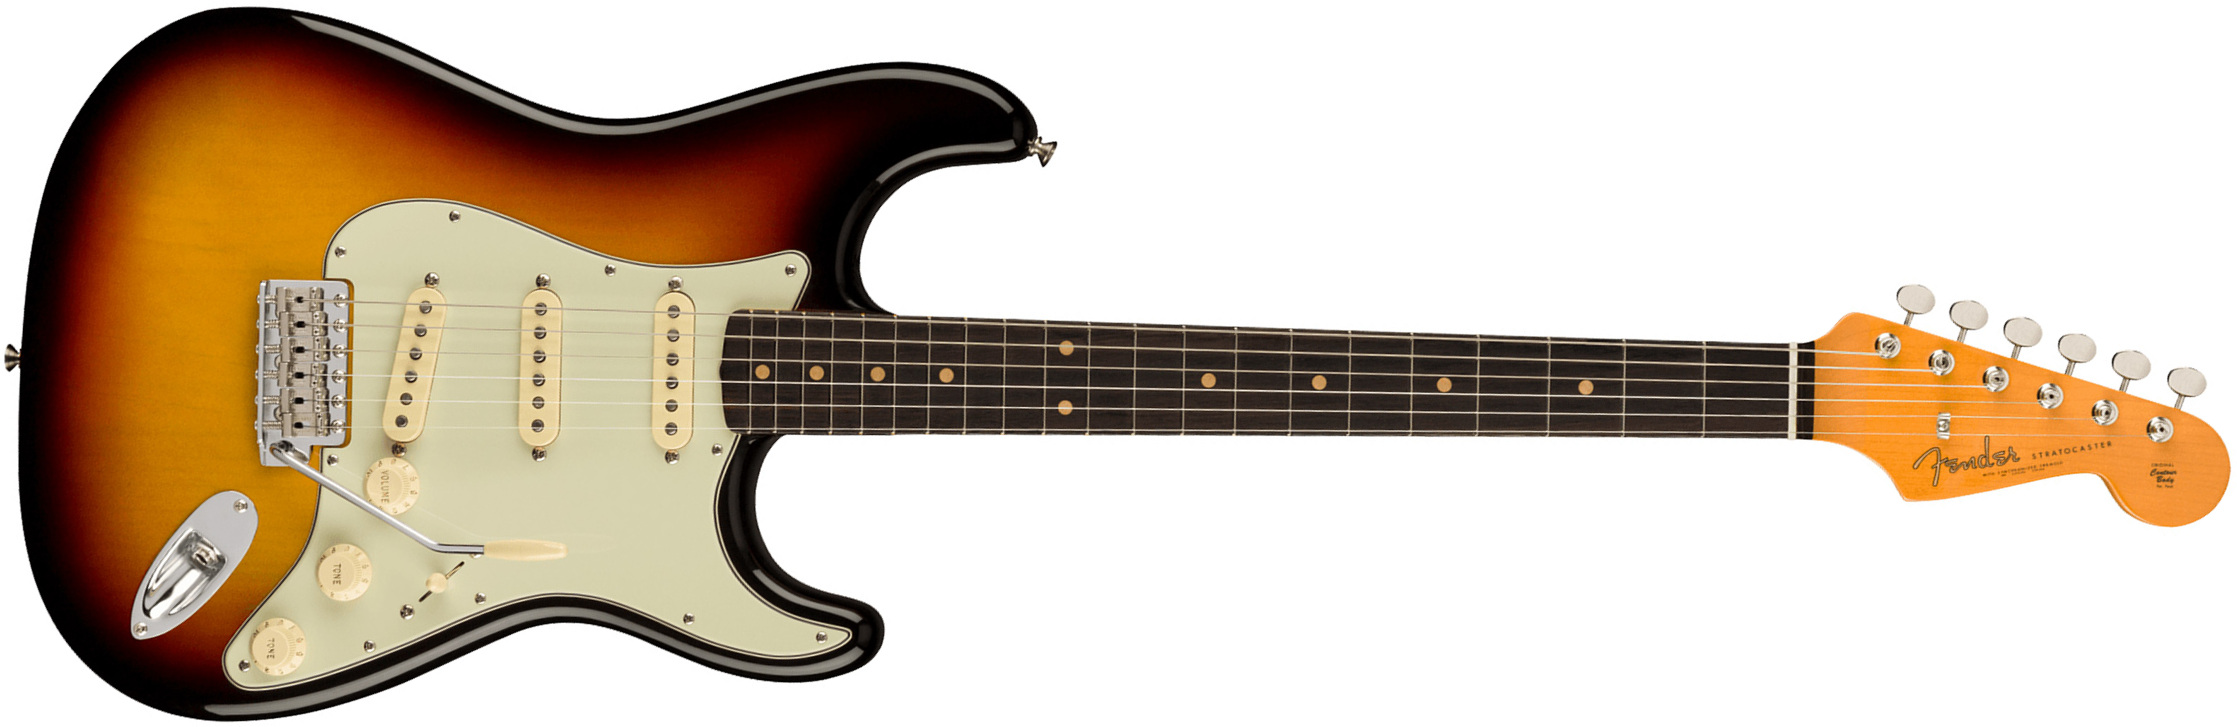 Fender Strat 1961 American Vintage Ii Usa 3s Trem Rw - 3-color Sunburst - Elektrische gitaar in Str-vorm - Main picture